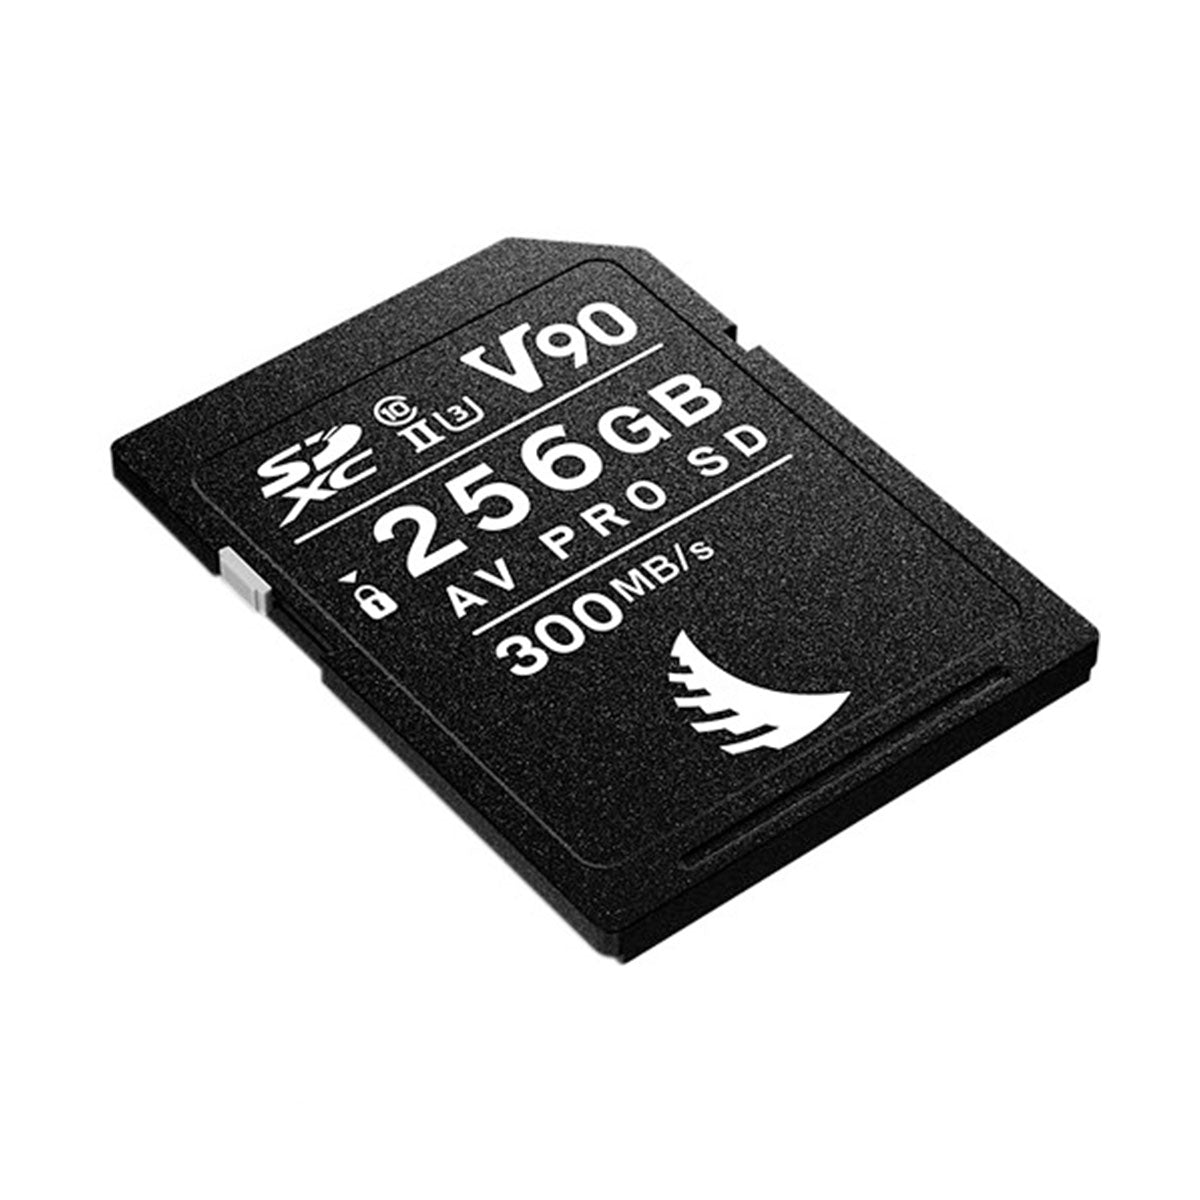 Angelbird 256GB AV Pro MK2 UHS-II SDXC (V90) Memory Card